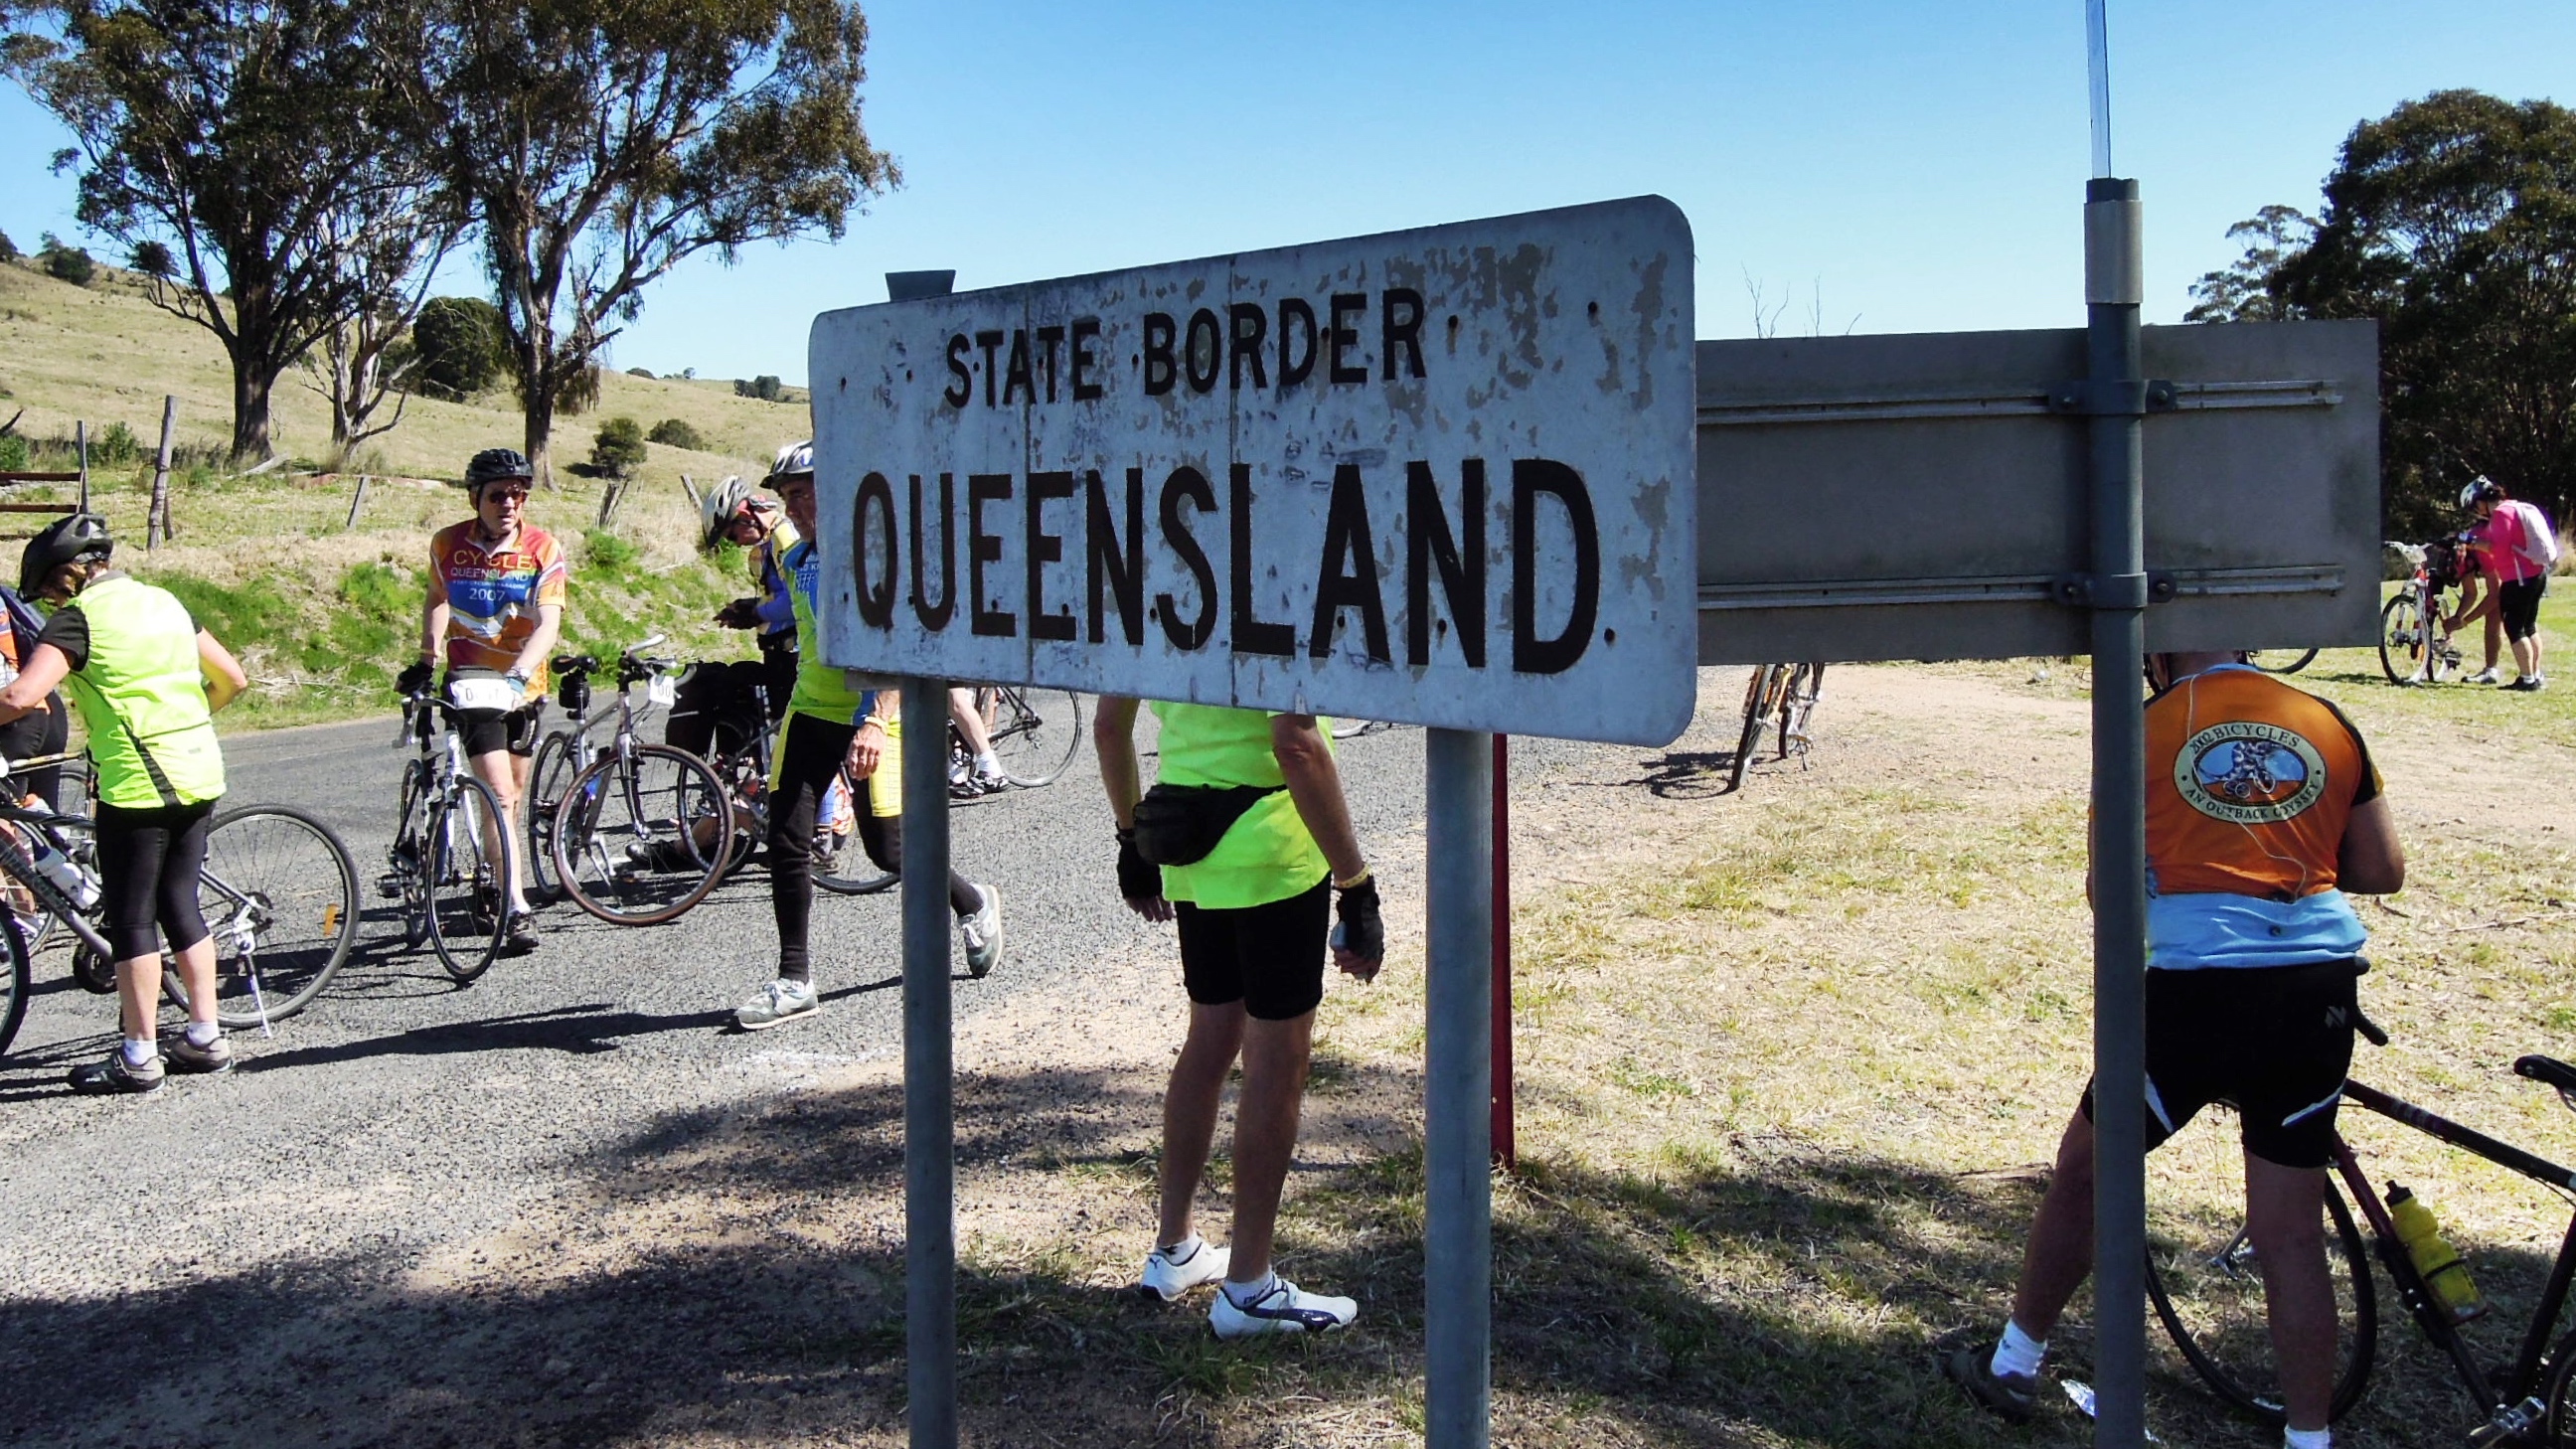 State border of Queensland, Australia (photo credit: David McKelvey/flickr)